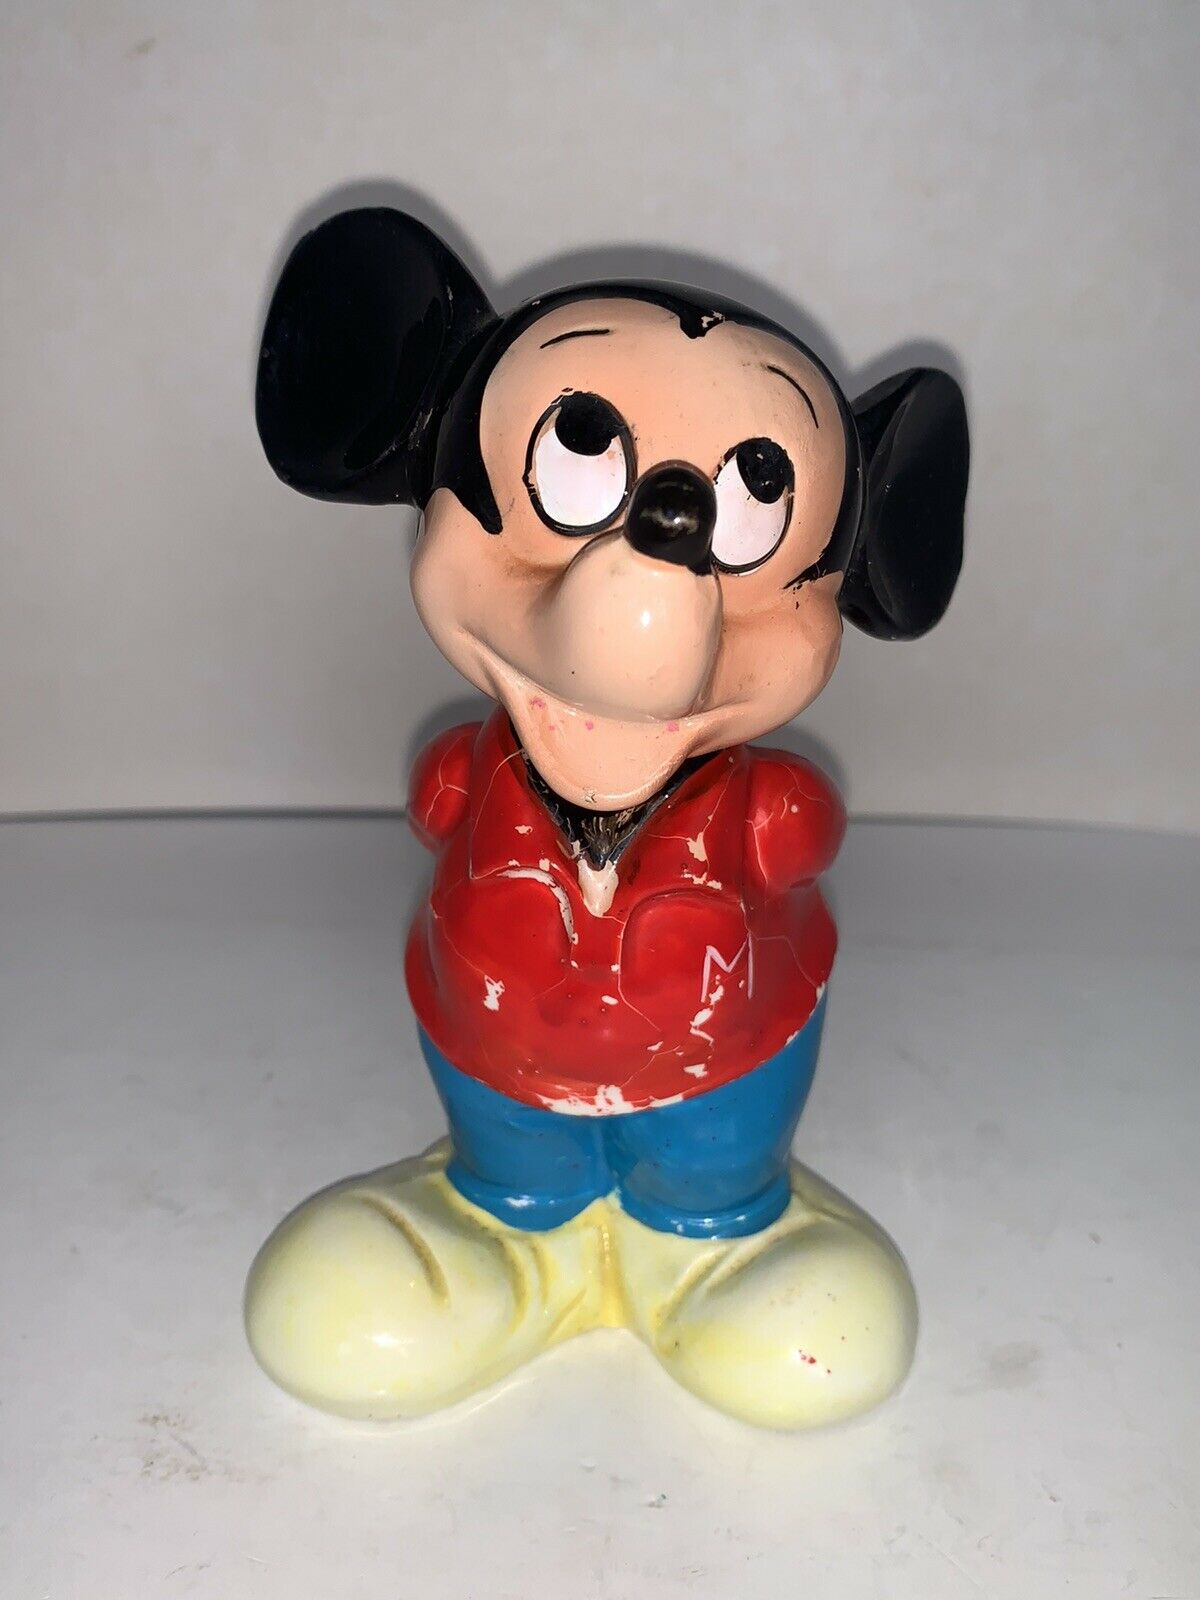 Vintage Disneyland Souvenir Mickey Mouse Bank, Japan, Cold Paint